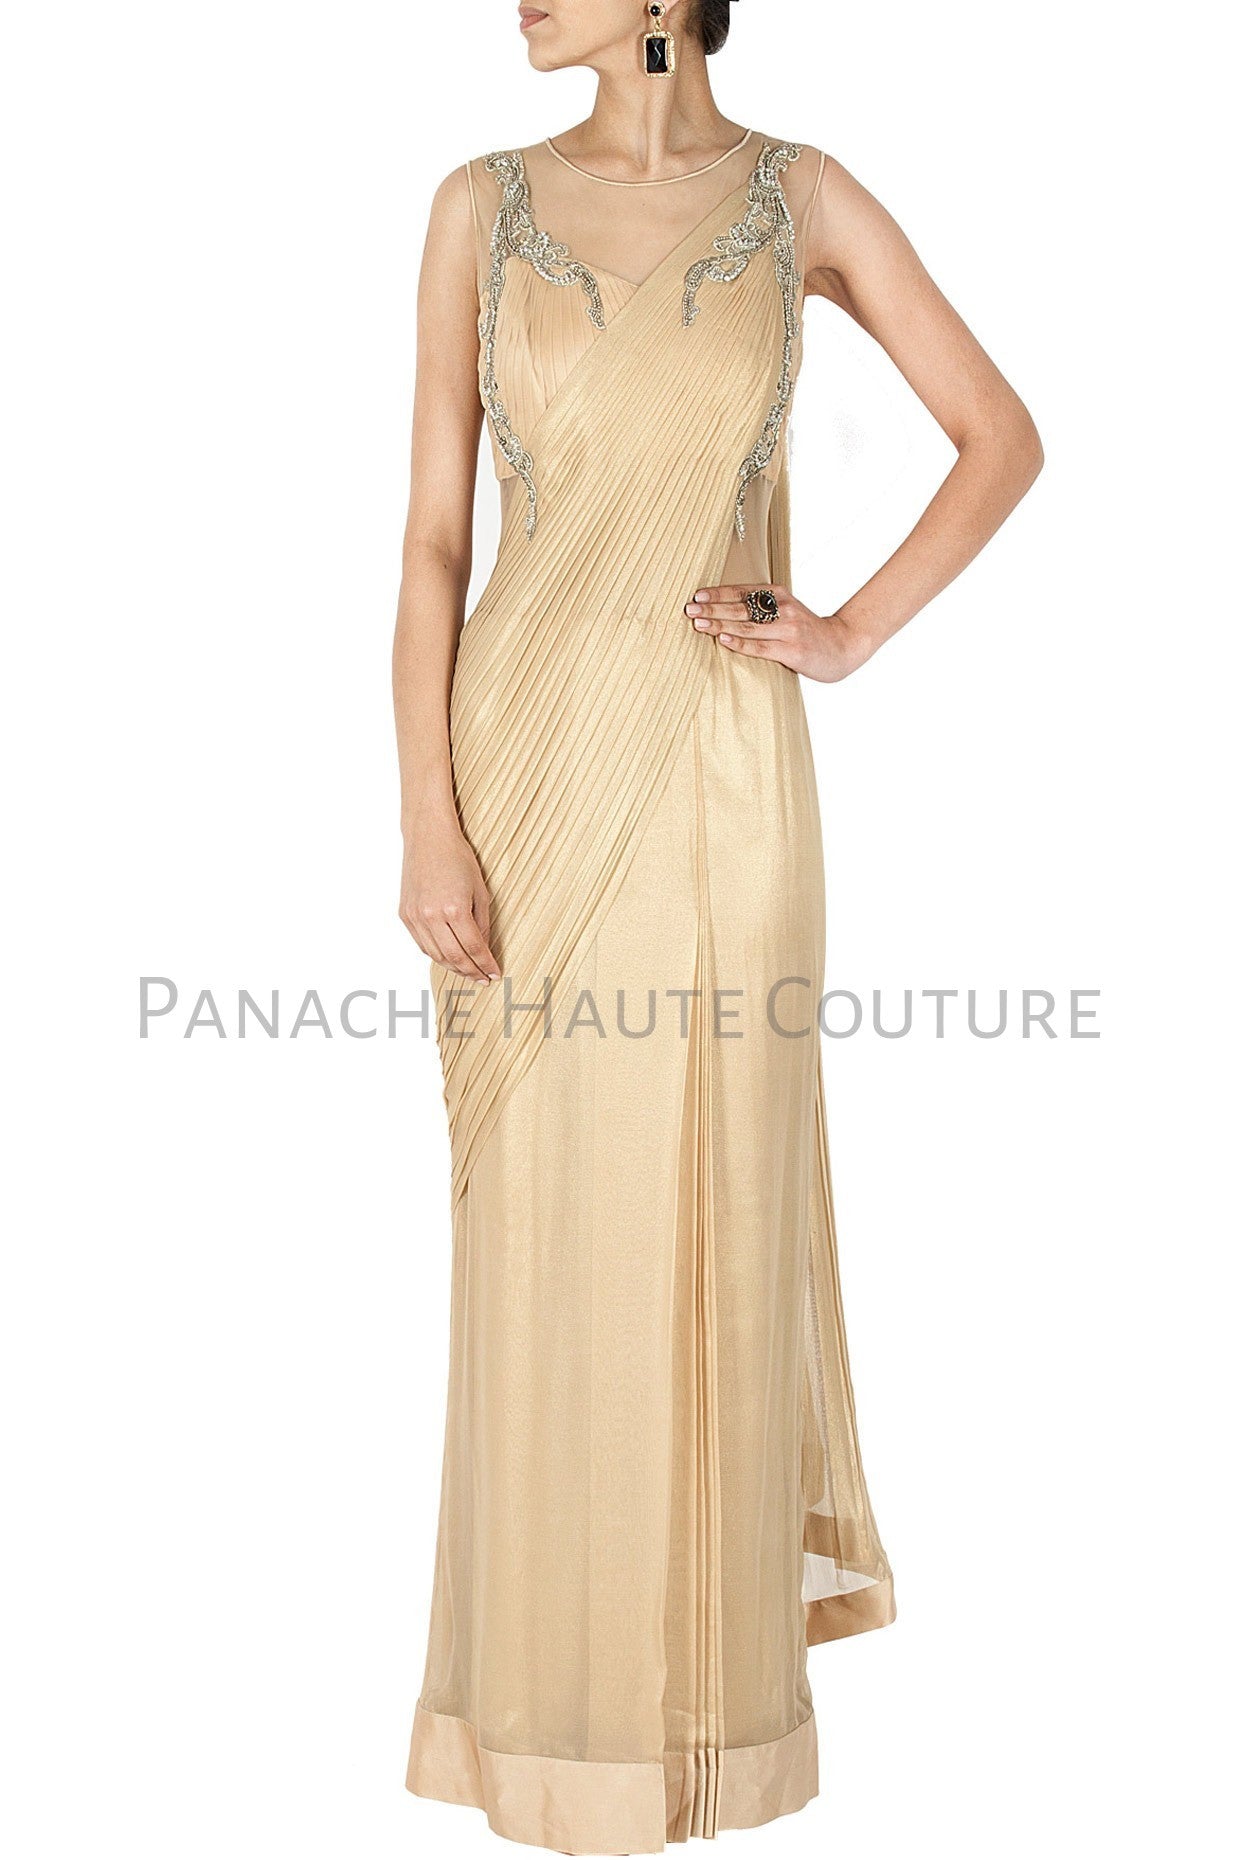 saree gown online low price